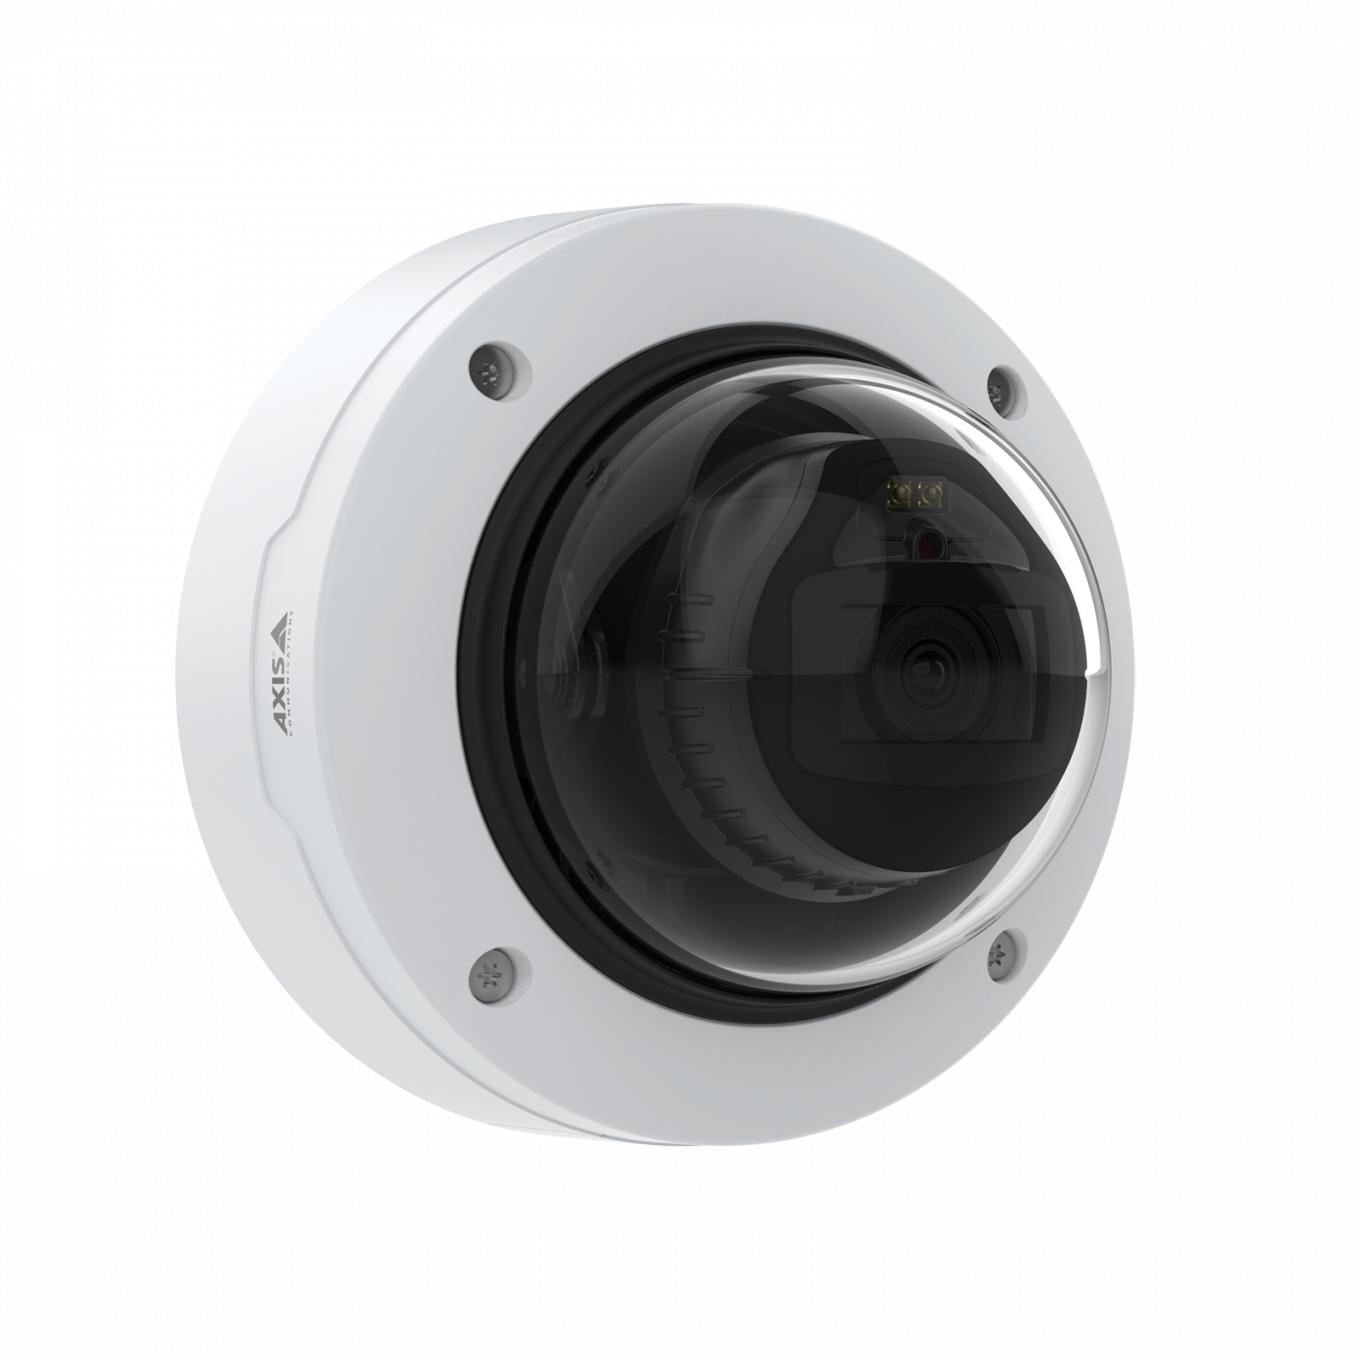 Купольная камера AXIS P3267-LV Dome Camera, установленная на стене, вид справа